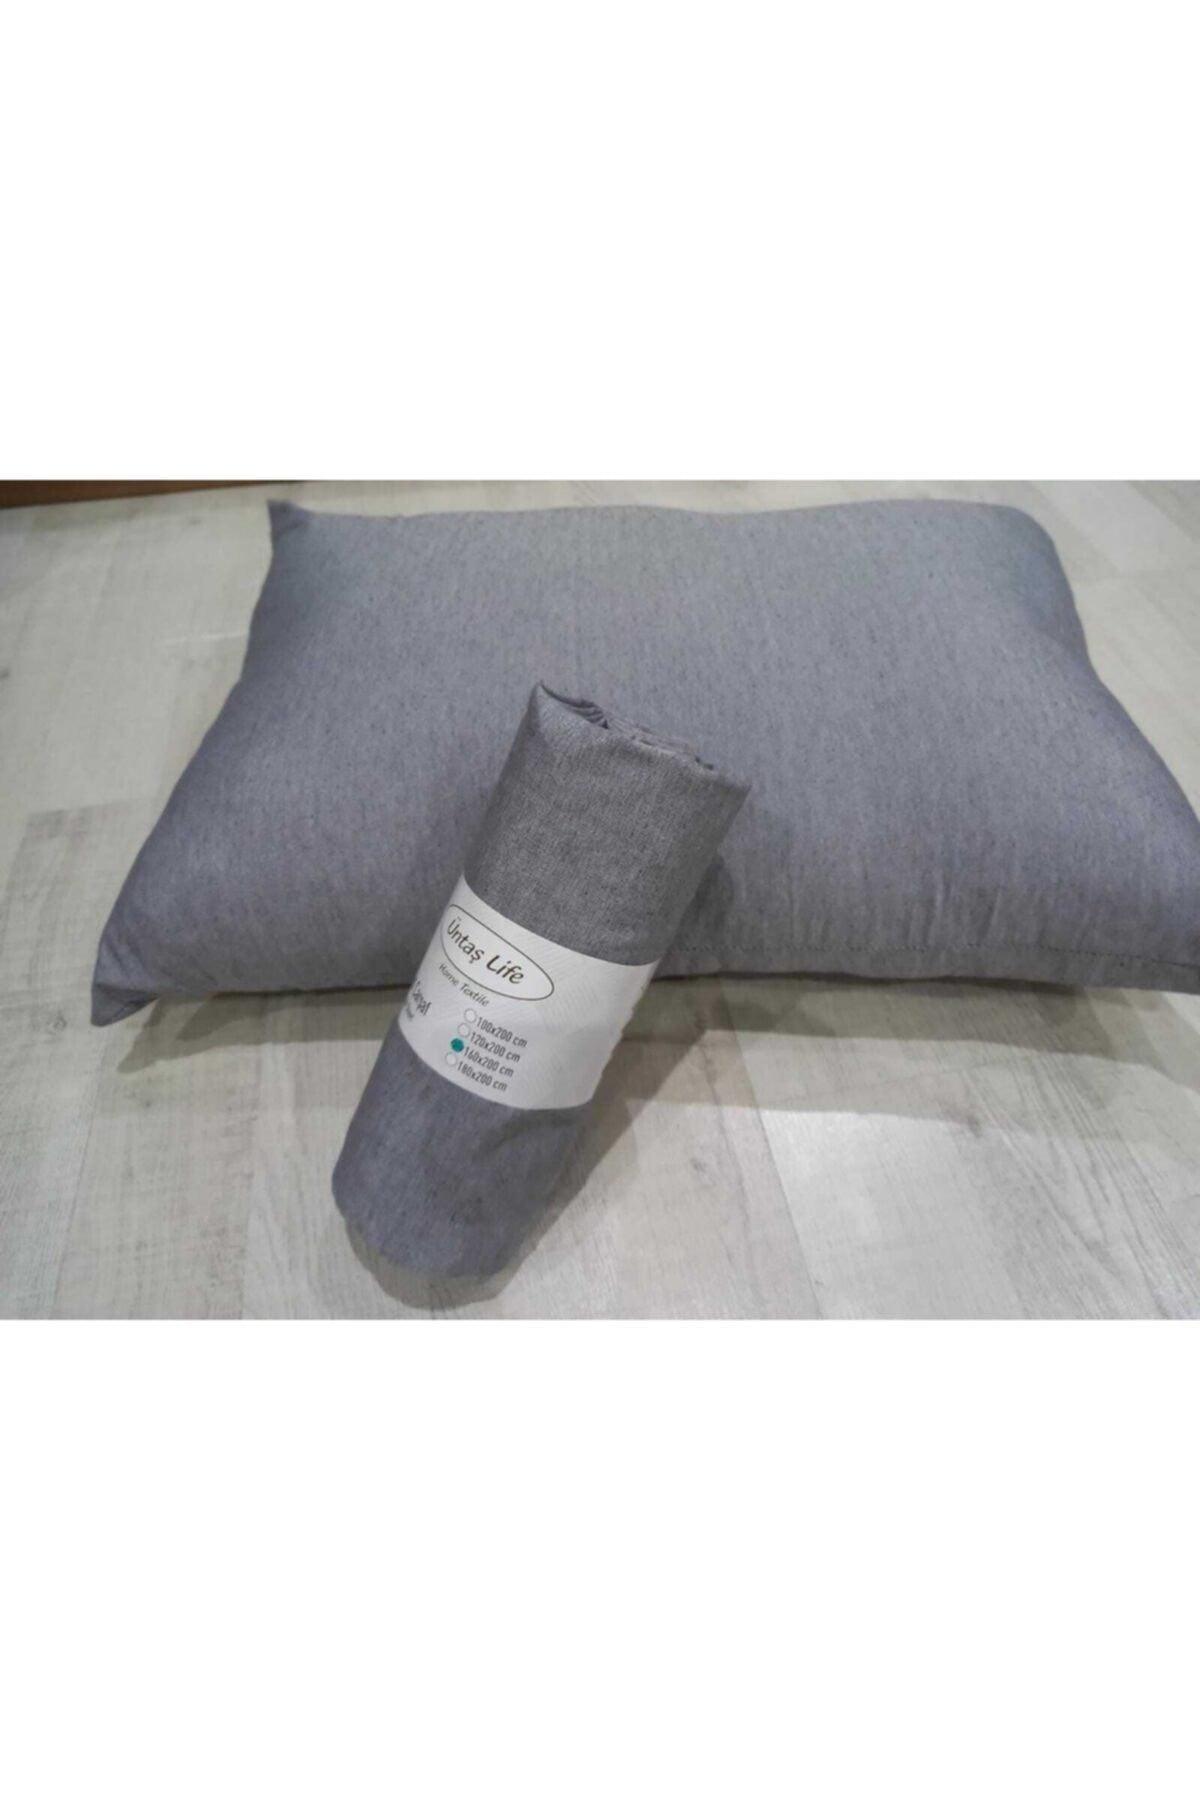 Life 160x200 Double Elastic Bed Sheet+2 Pillowcase Plain Gray Ec160plain Gray Sheet - Swordslife